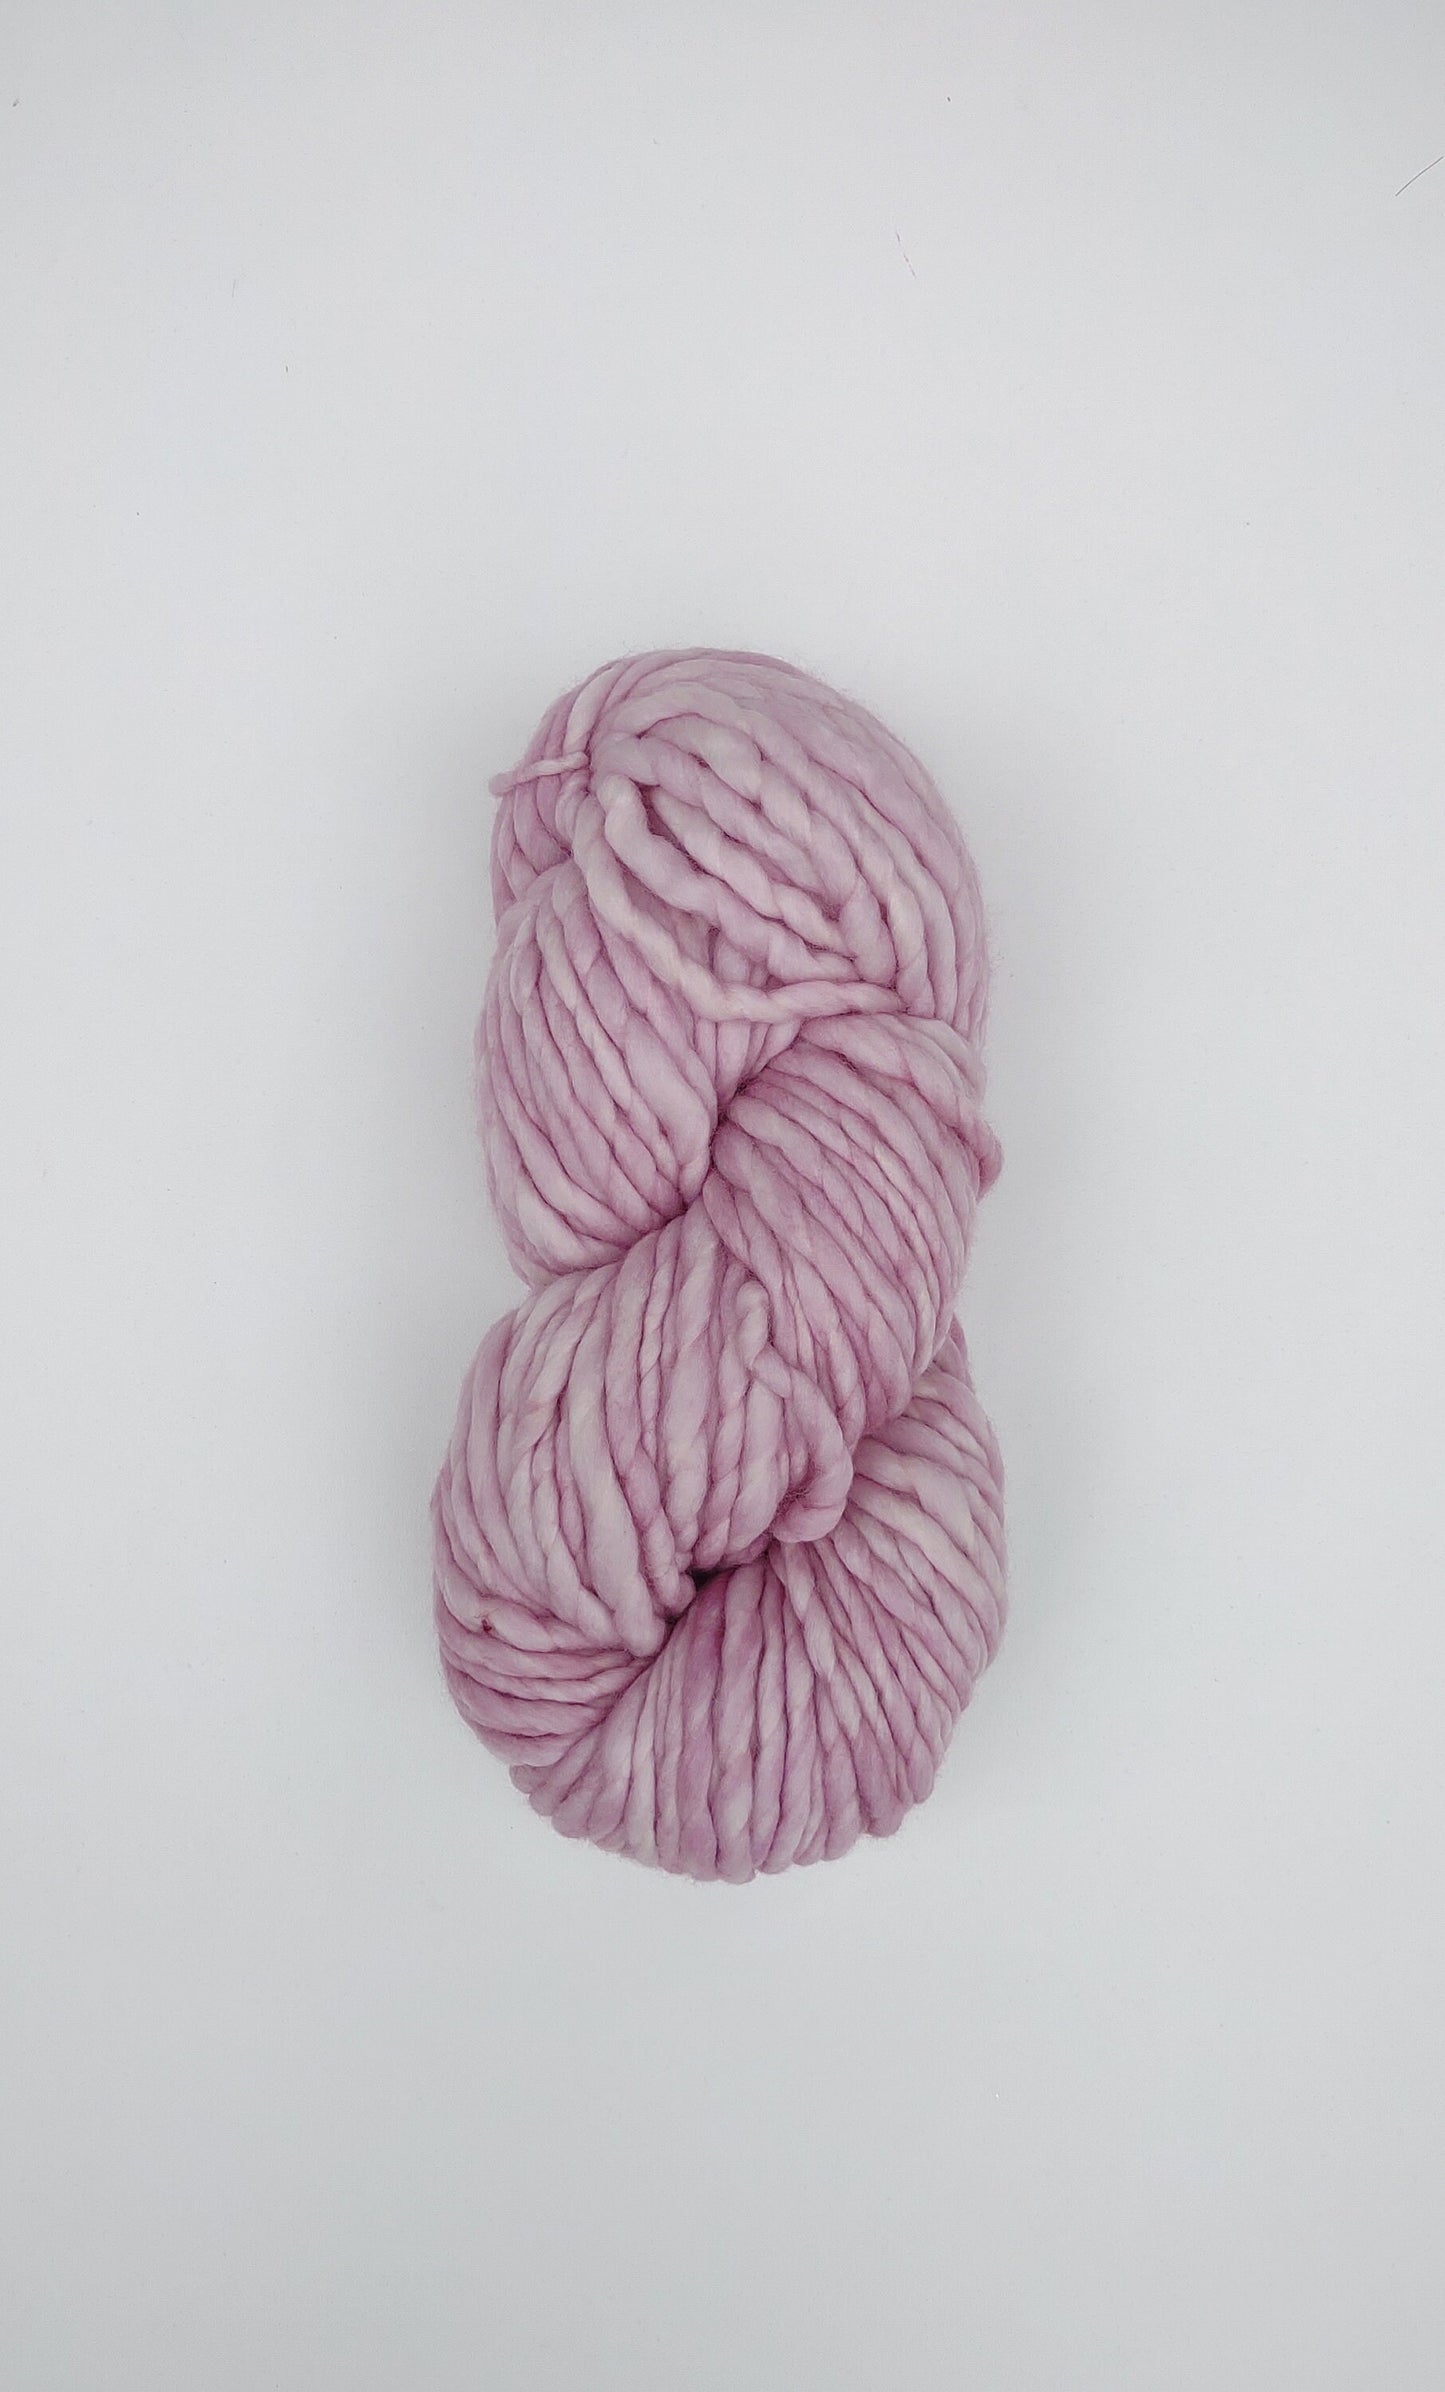 1 Skein Malabrigo Rasta Yarn in Valentina color. Merino Wool. Soft Merino Wool. Blush pink yarn kit.